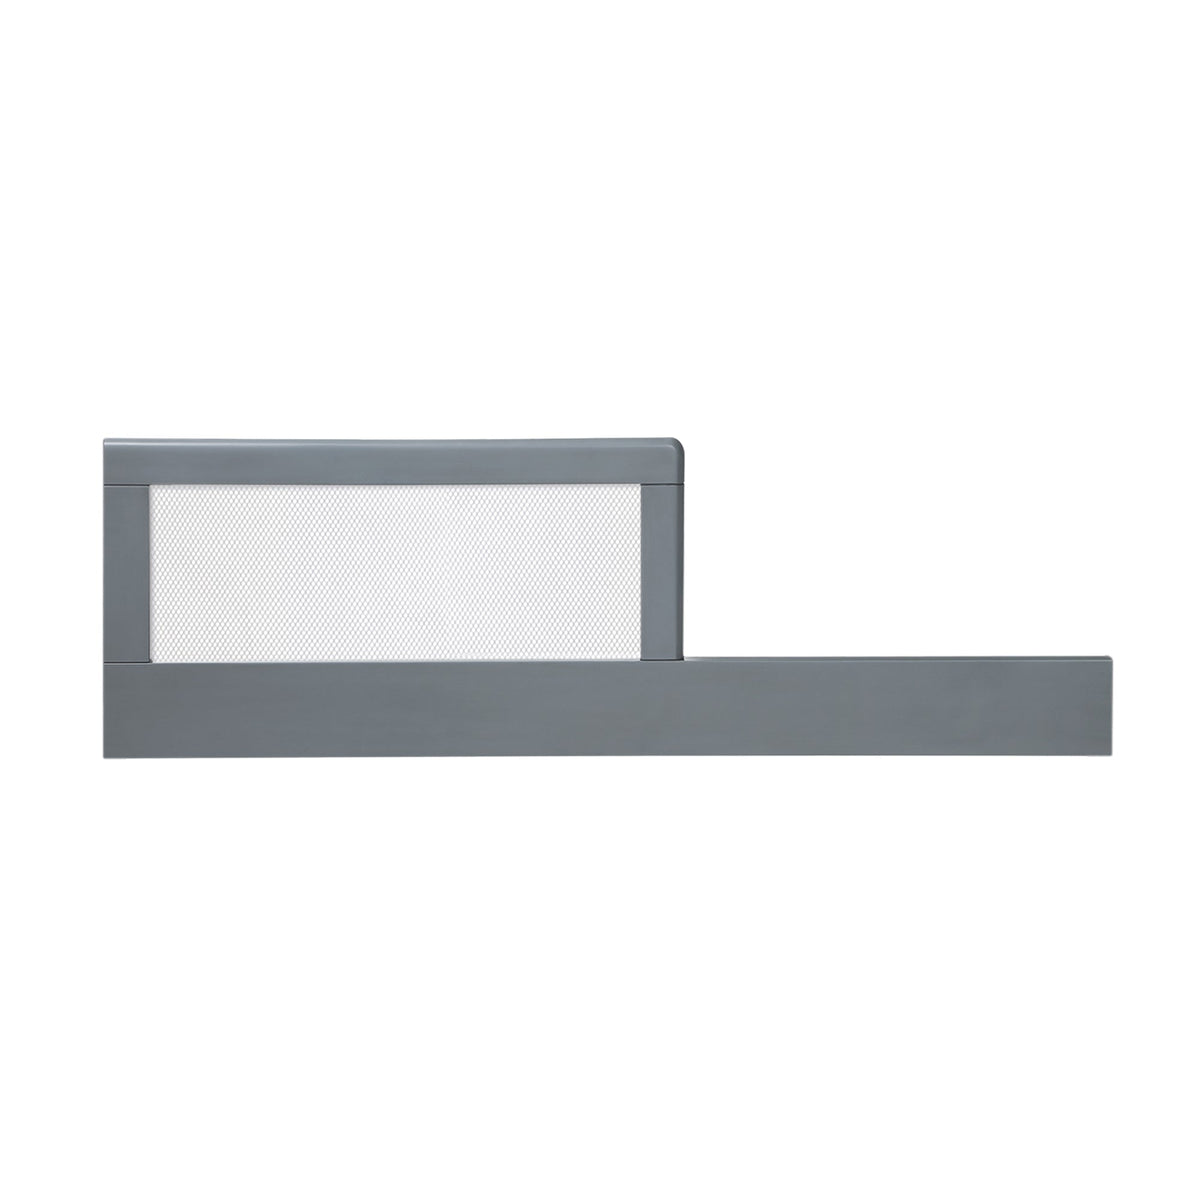 Breathable™ Mesh 2-in-1 Mini Crib — White — Greenguard Gold